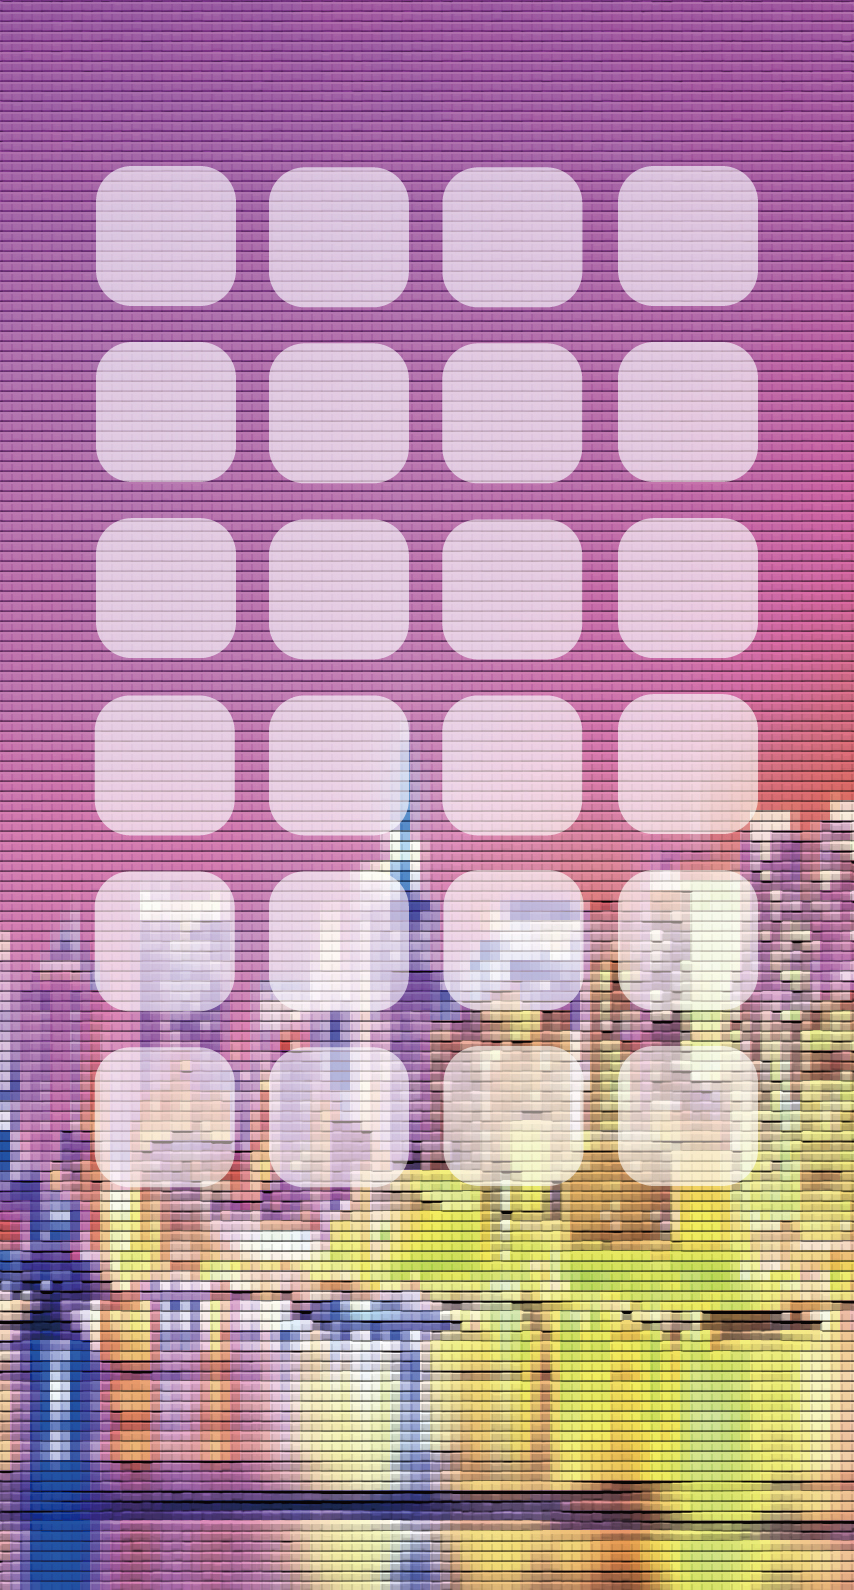 iPhone 6s / iPhone 6 wallpaper